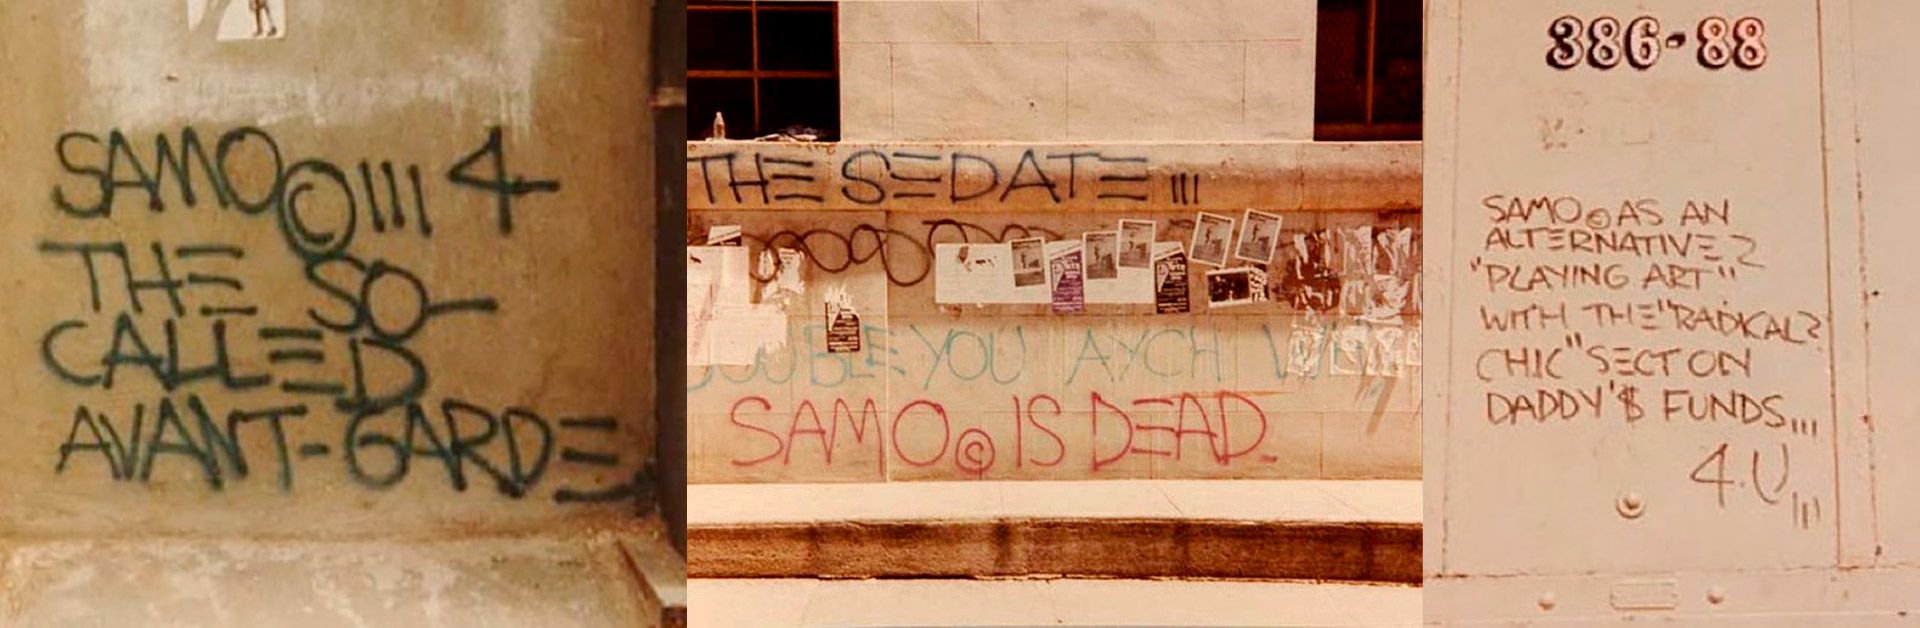 Samo Jean-Michel Basquiat